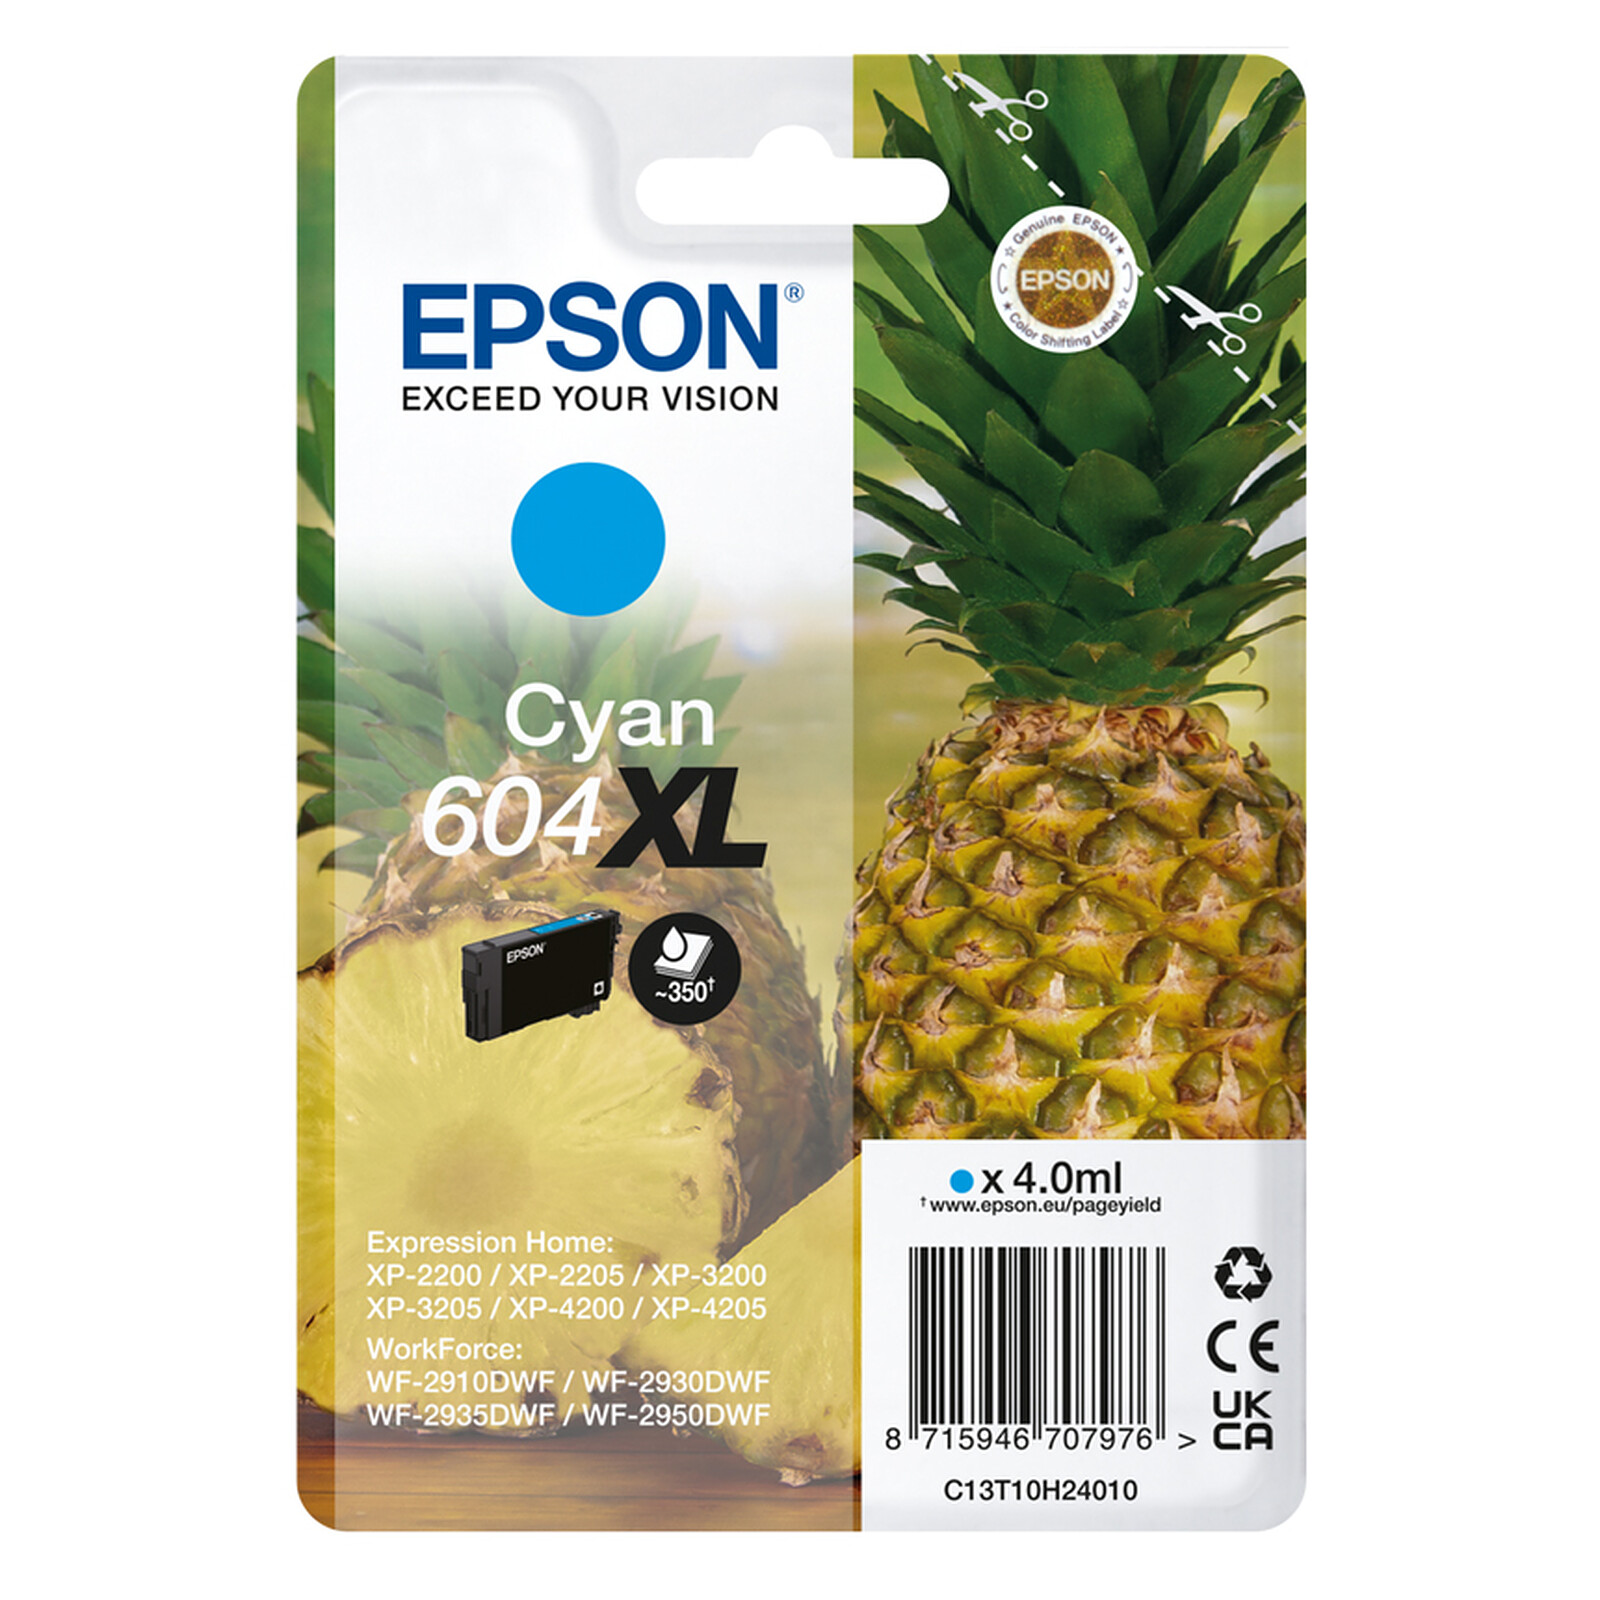 Cartouche jet d'encre Cyan 604XL compatible Epson Ananas